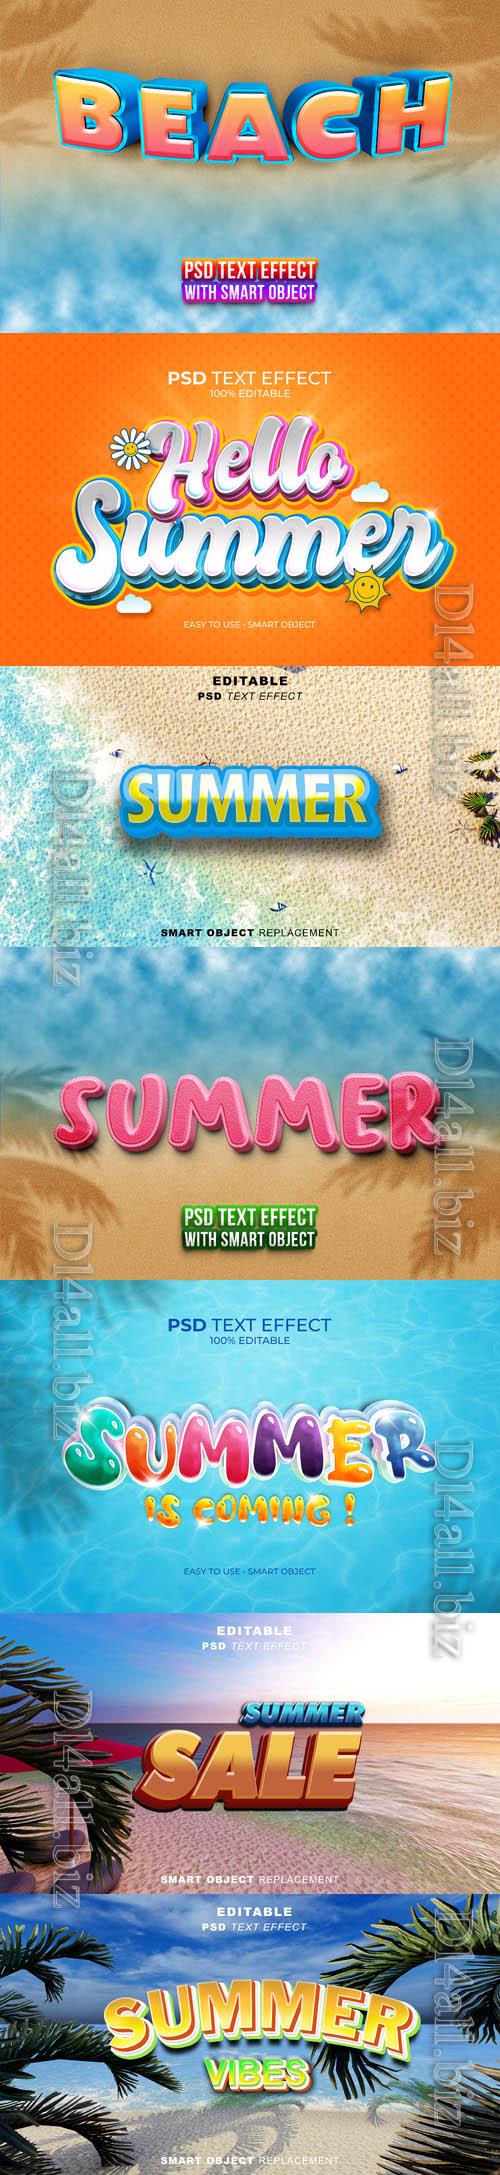 Psd style text effect editable set vol 457